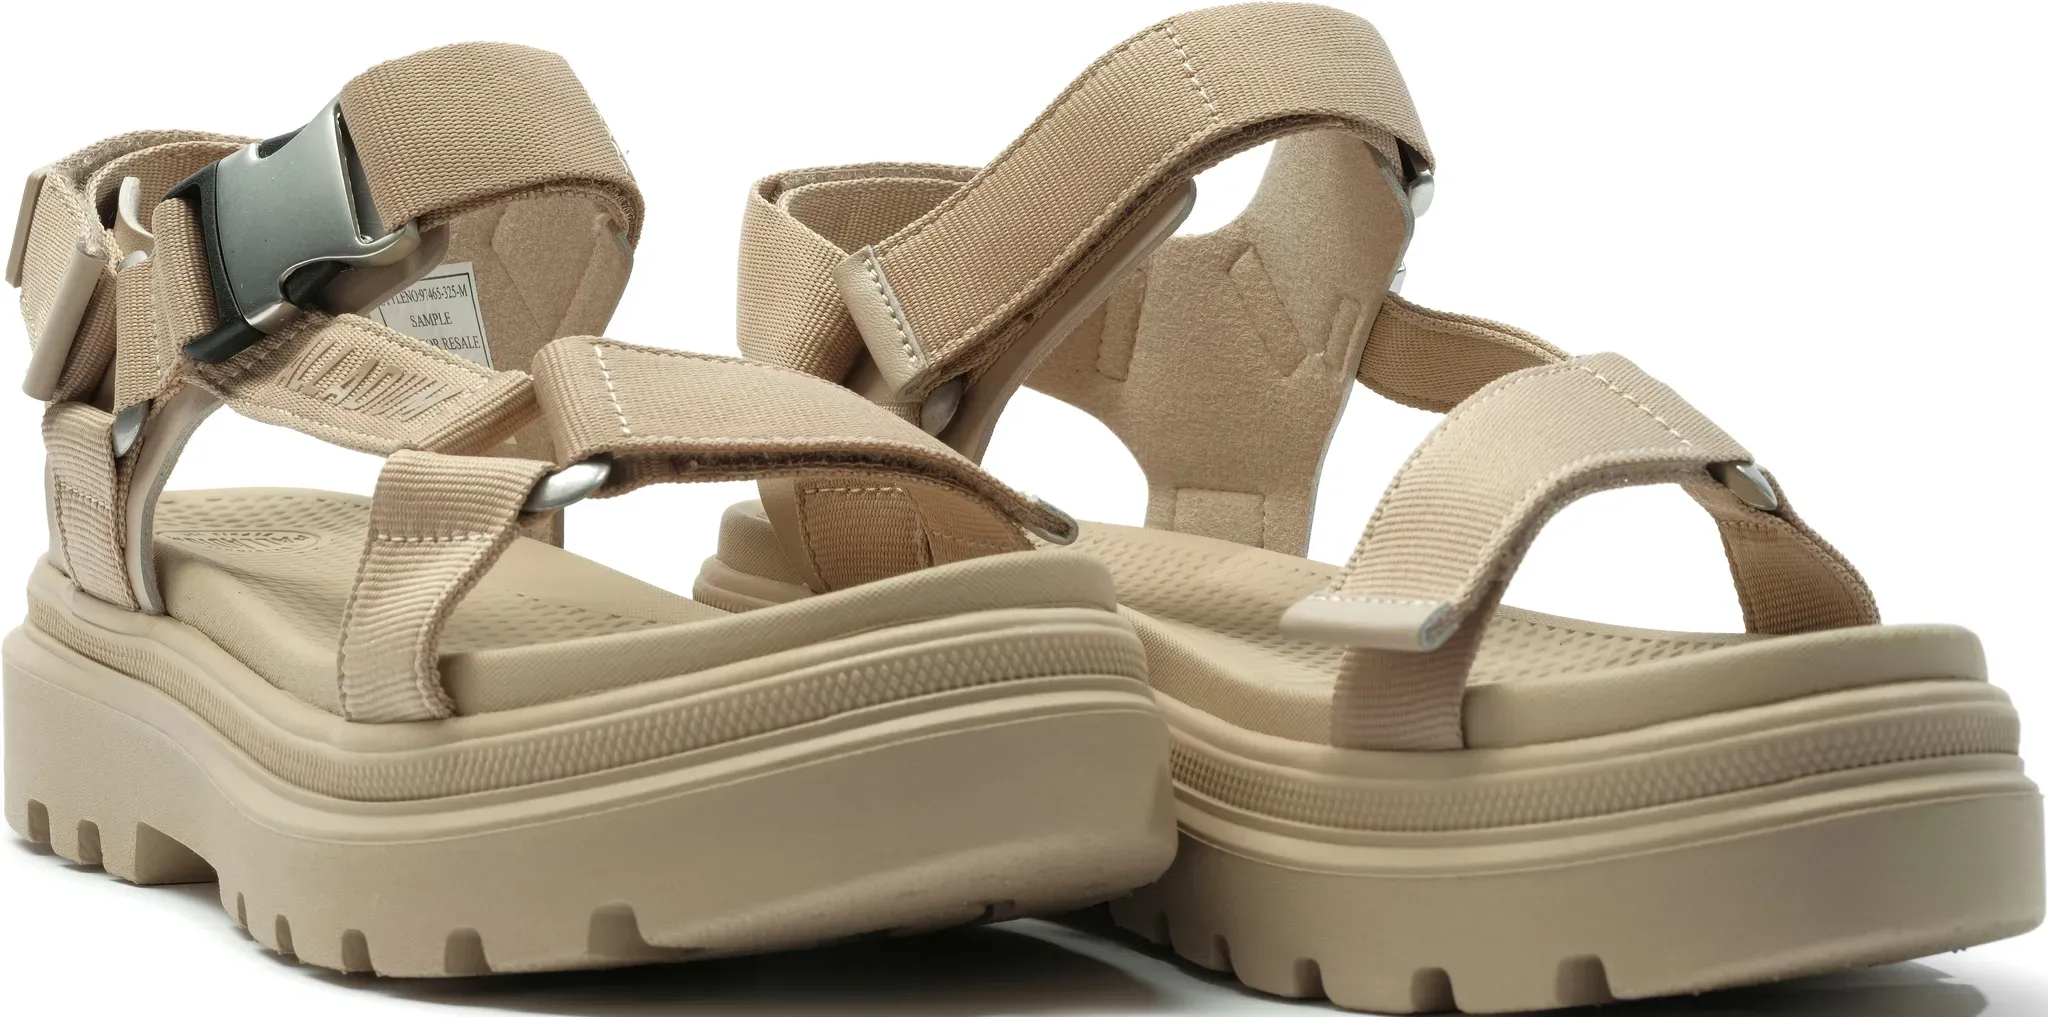 Sandale PALLADIUM "PALLACRUISE STRAP" Gr. 42, beige Schuhe Sandalen